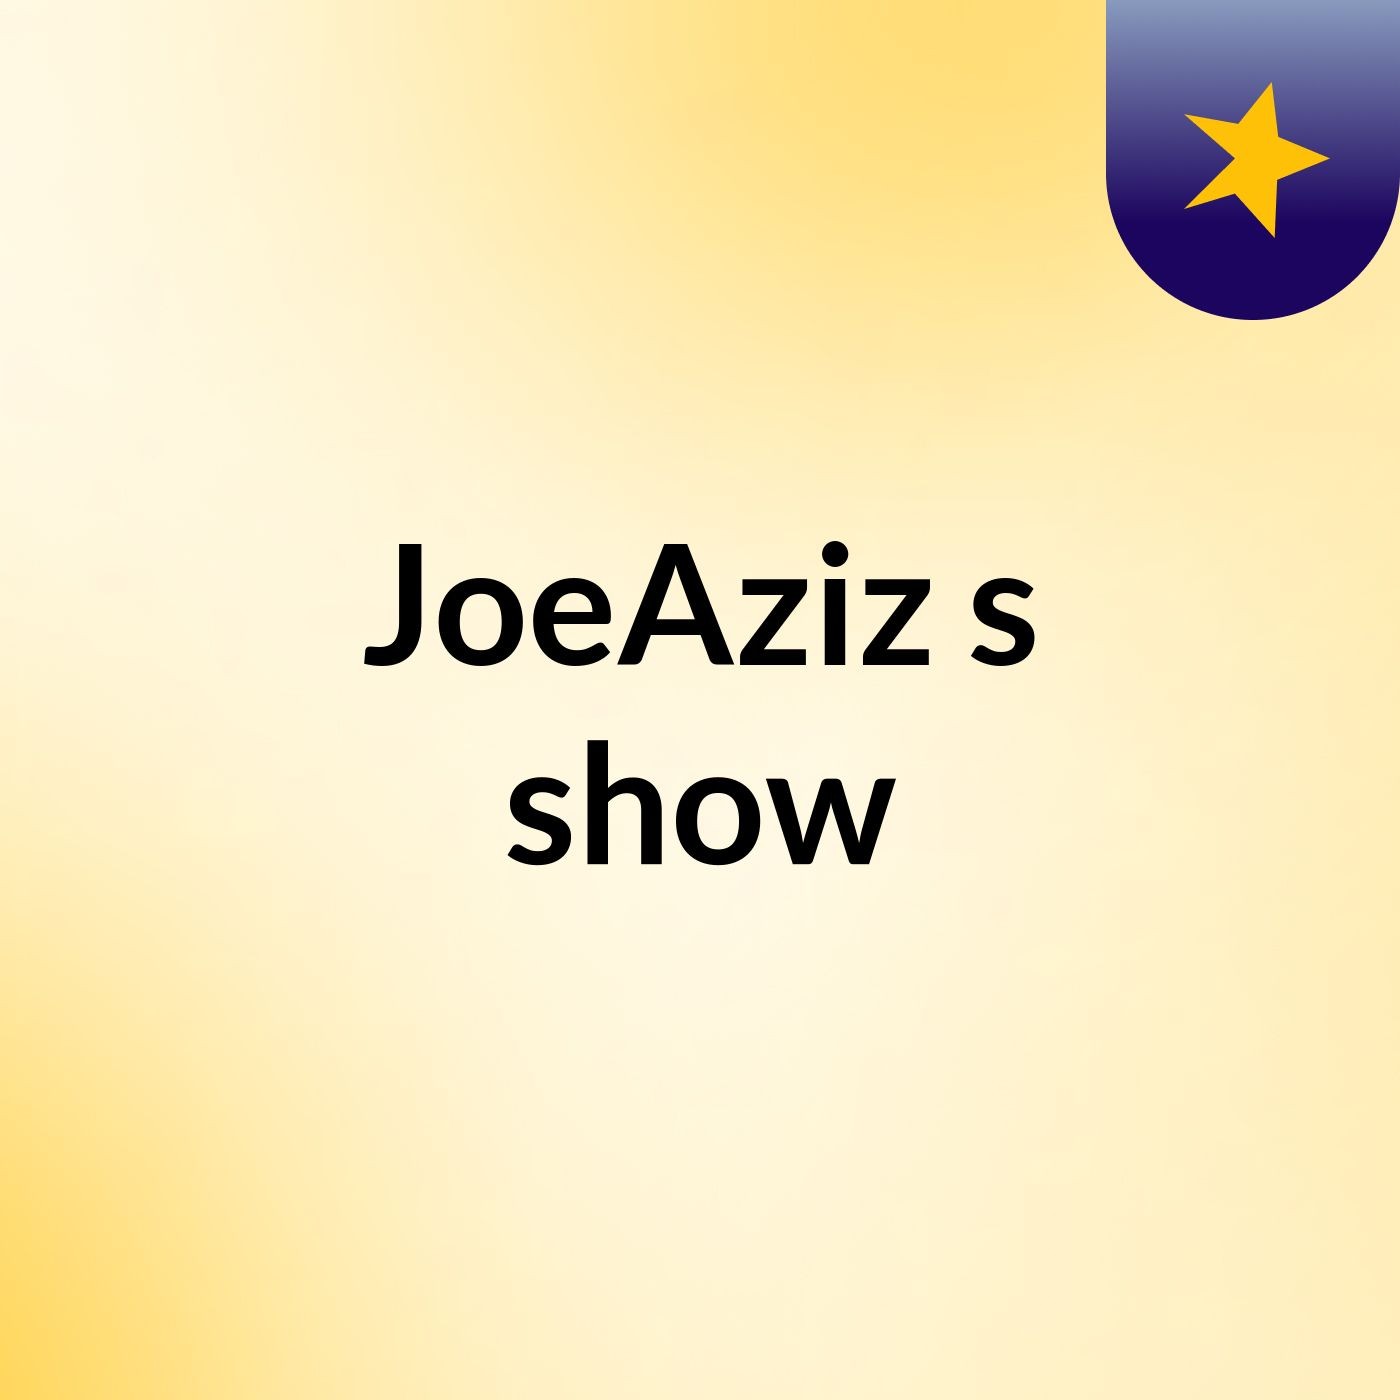 JoeAziz's show